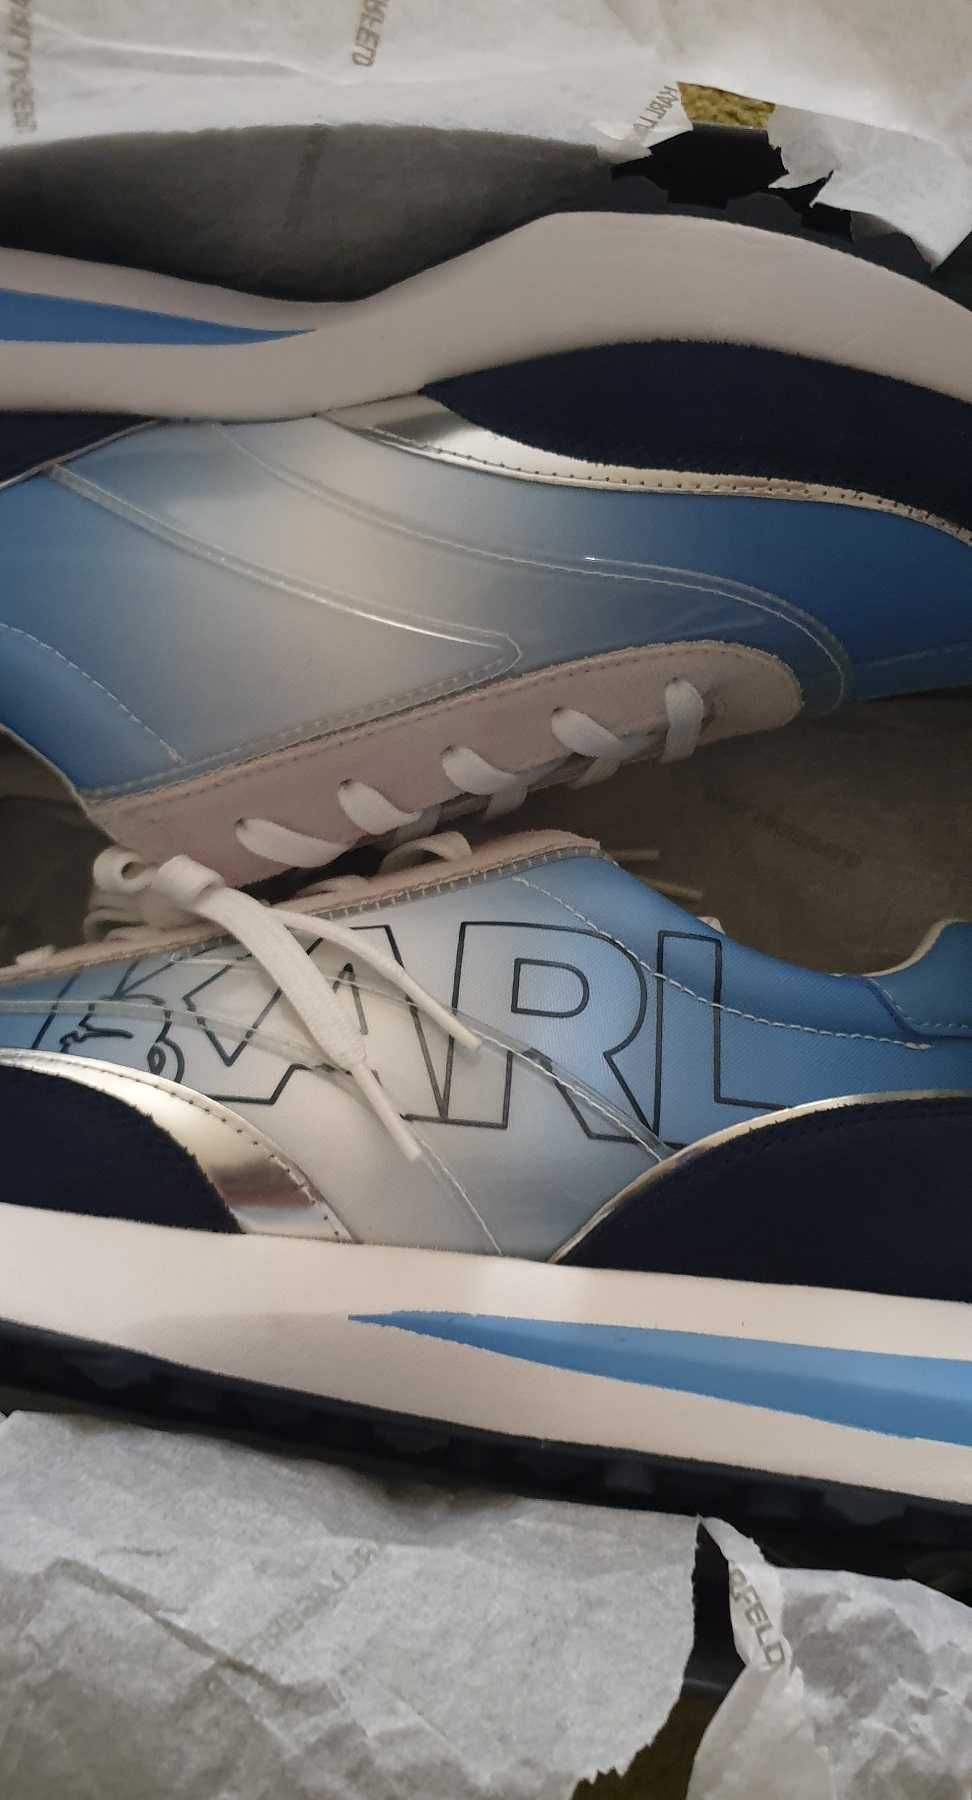 KARL LAGERFELD № 45 – Мъжки спортно елегантни обувки с лого нови кутия